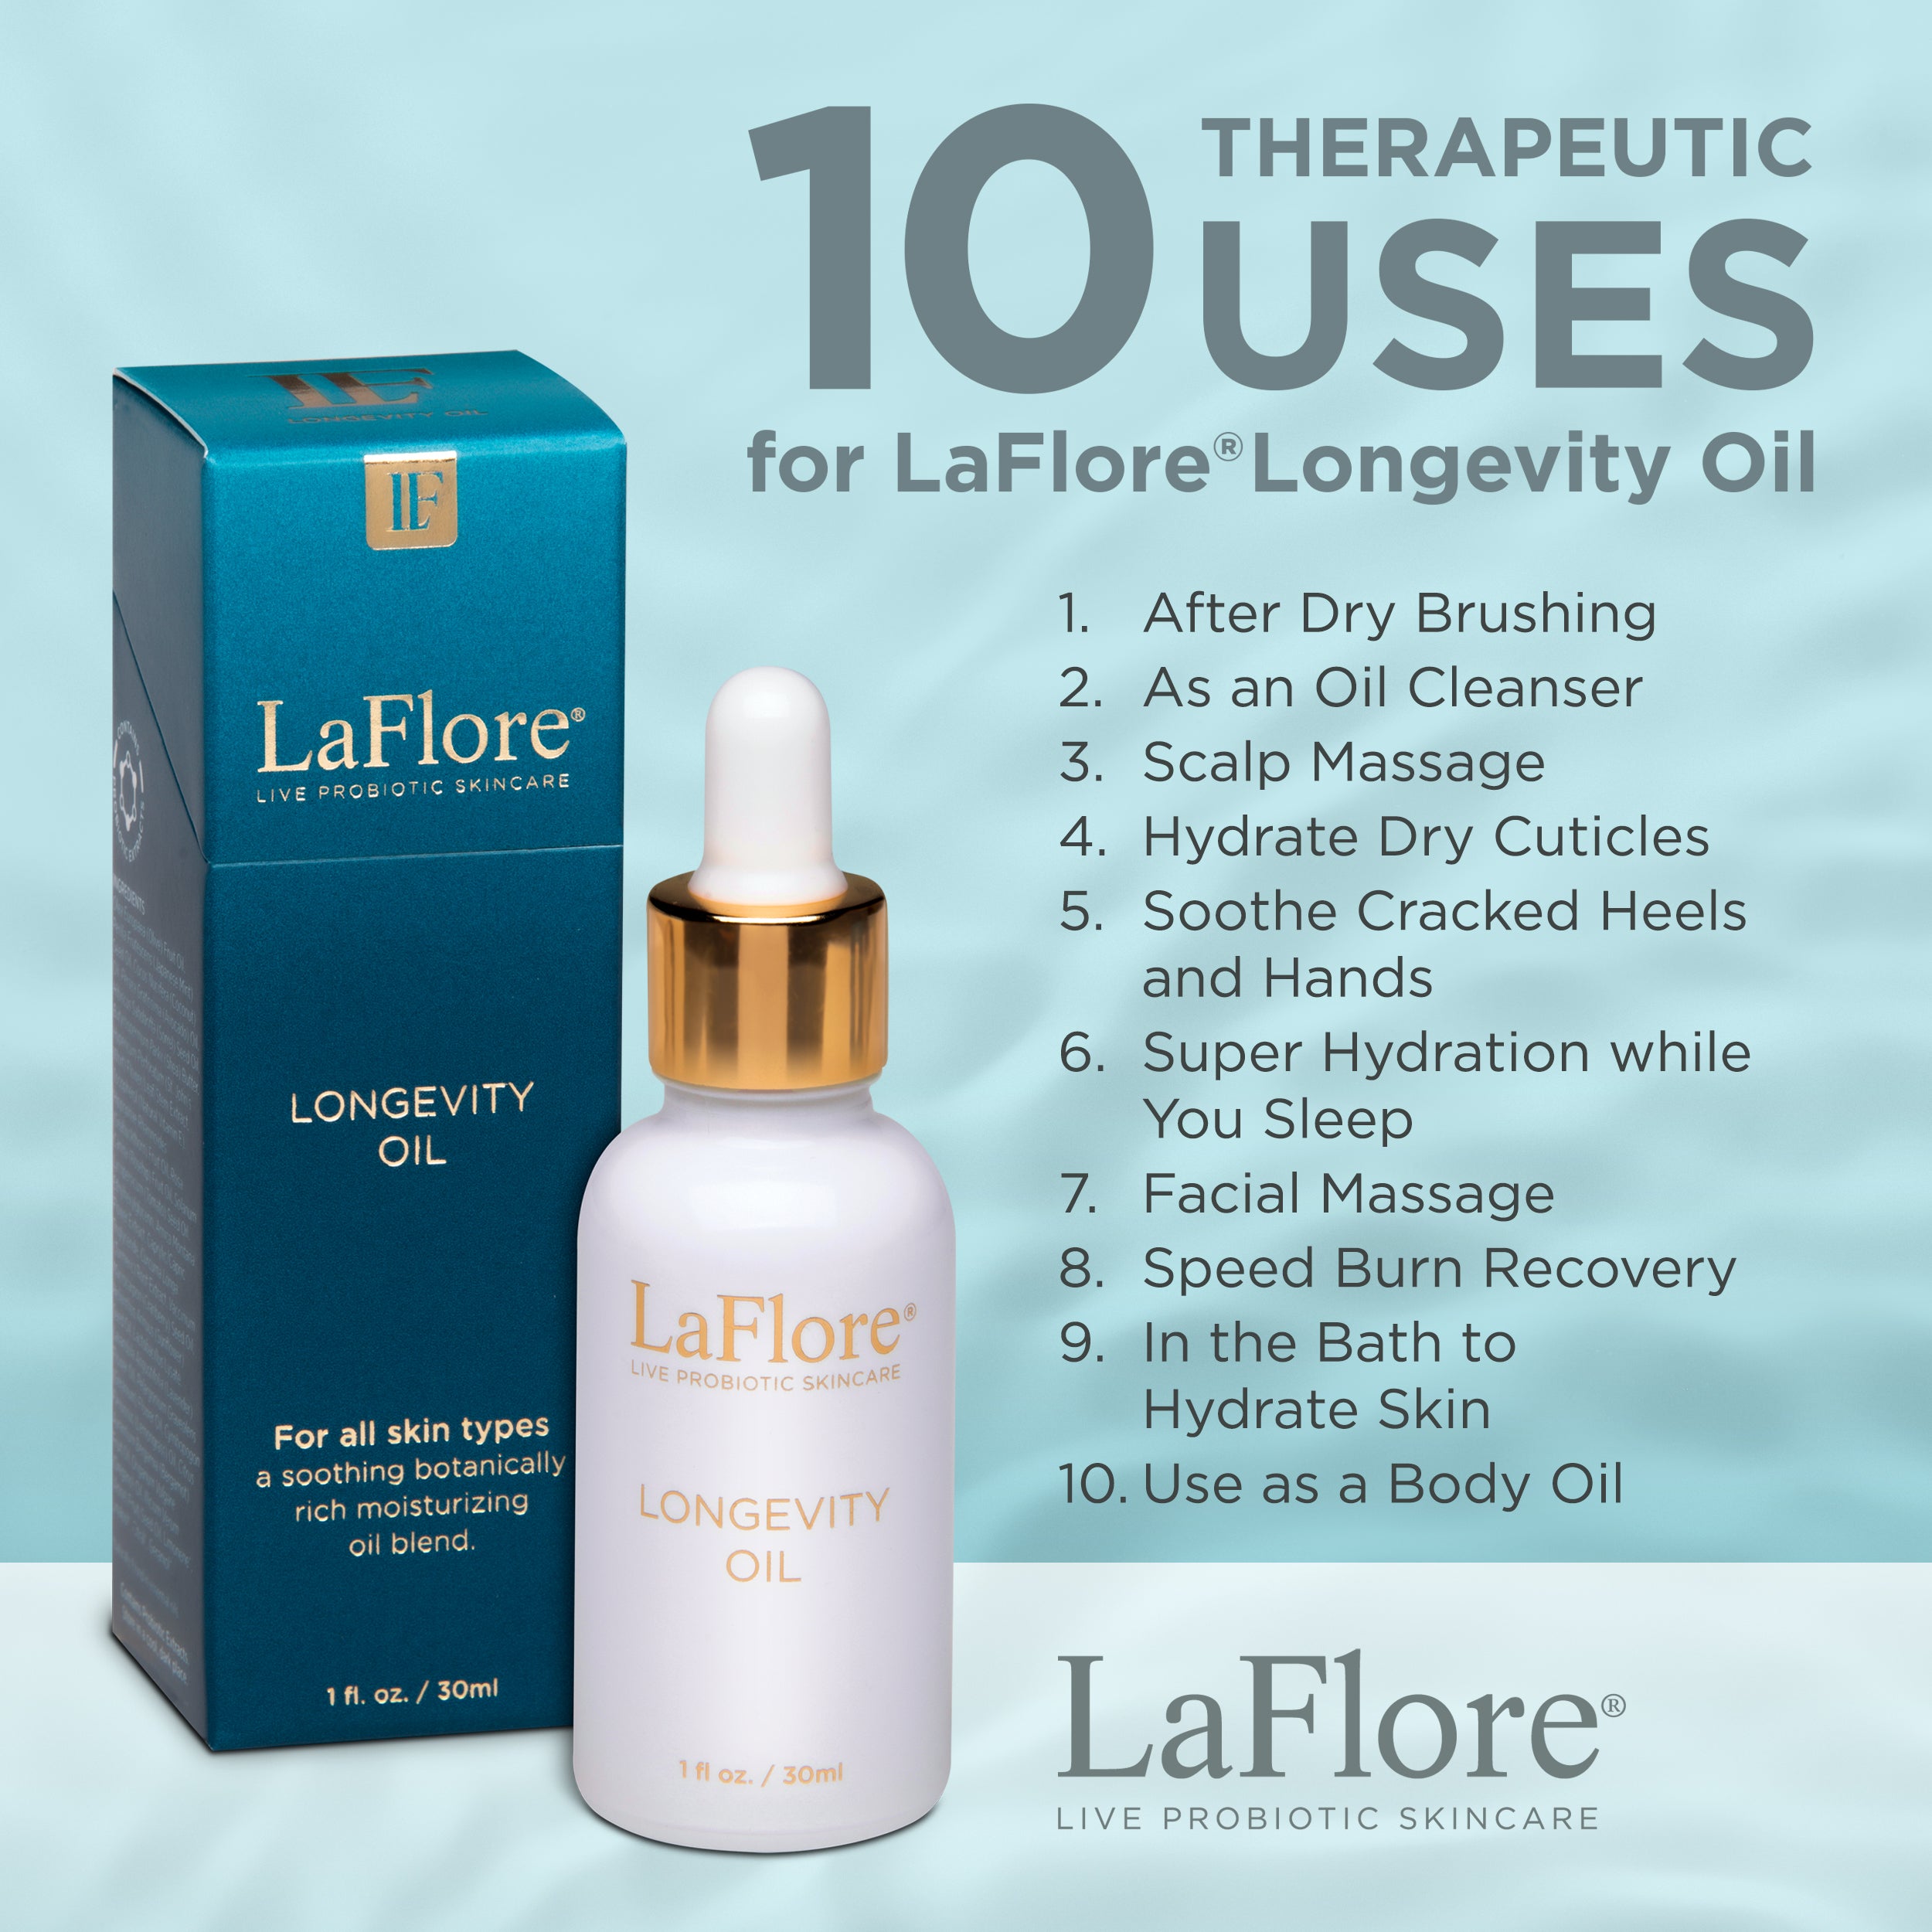 LaFlore Longevity Oil - Live Probiotic Skincare